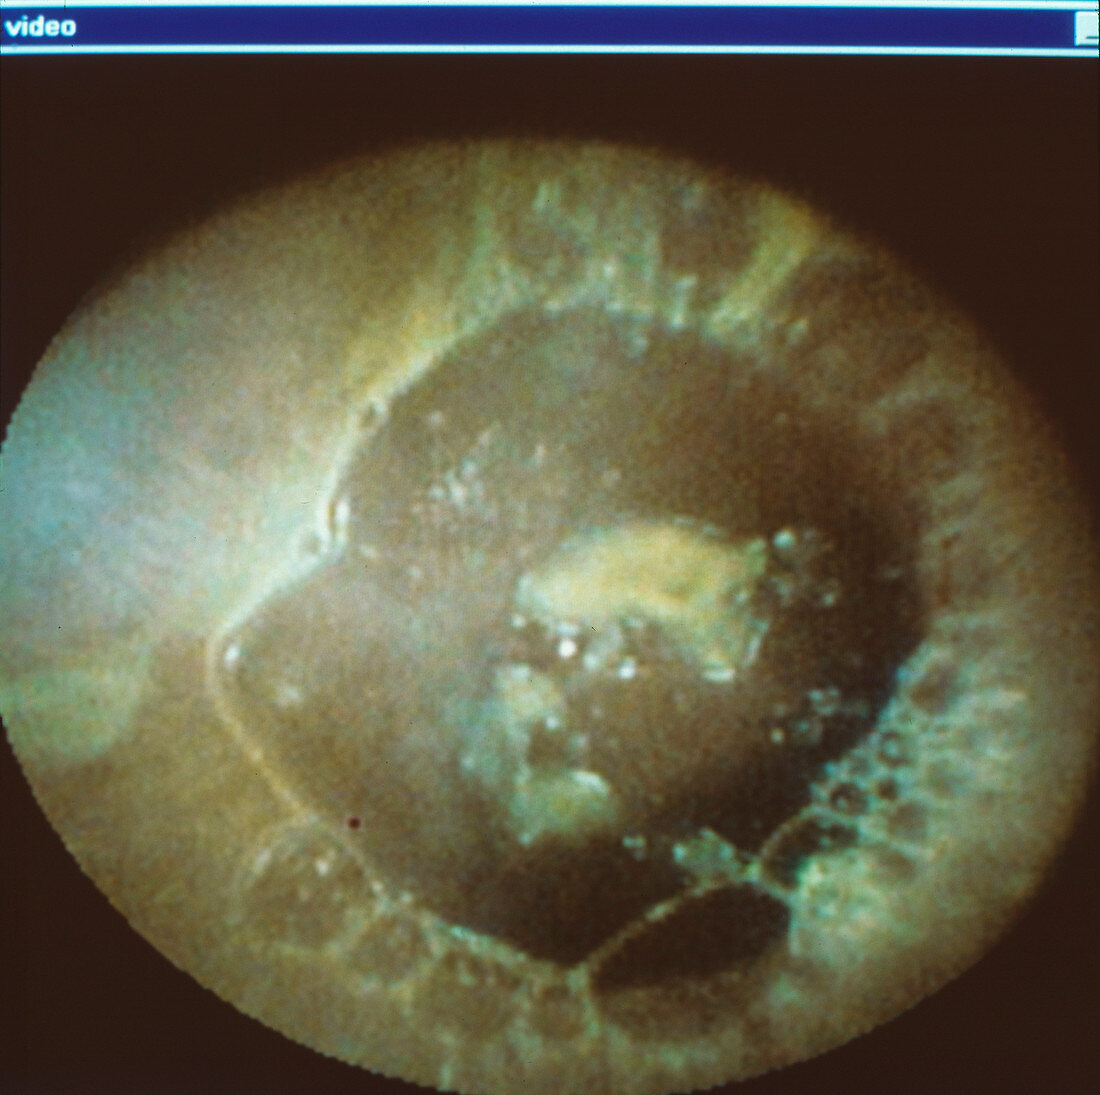 Small intestine endoscope view